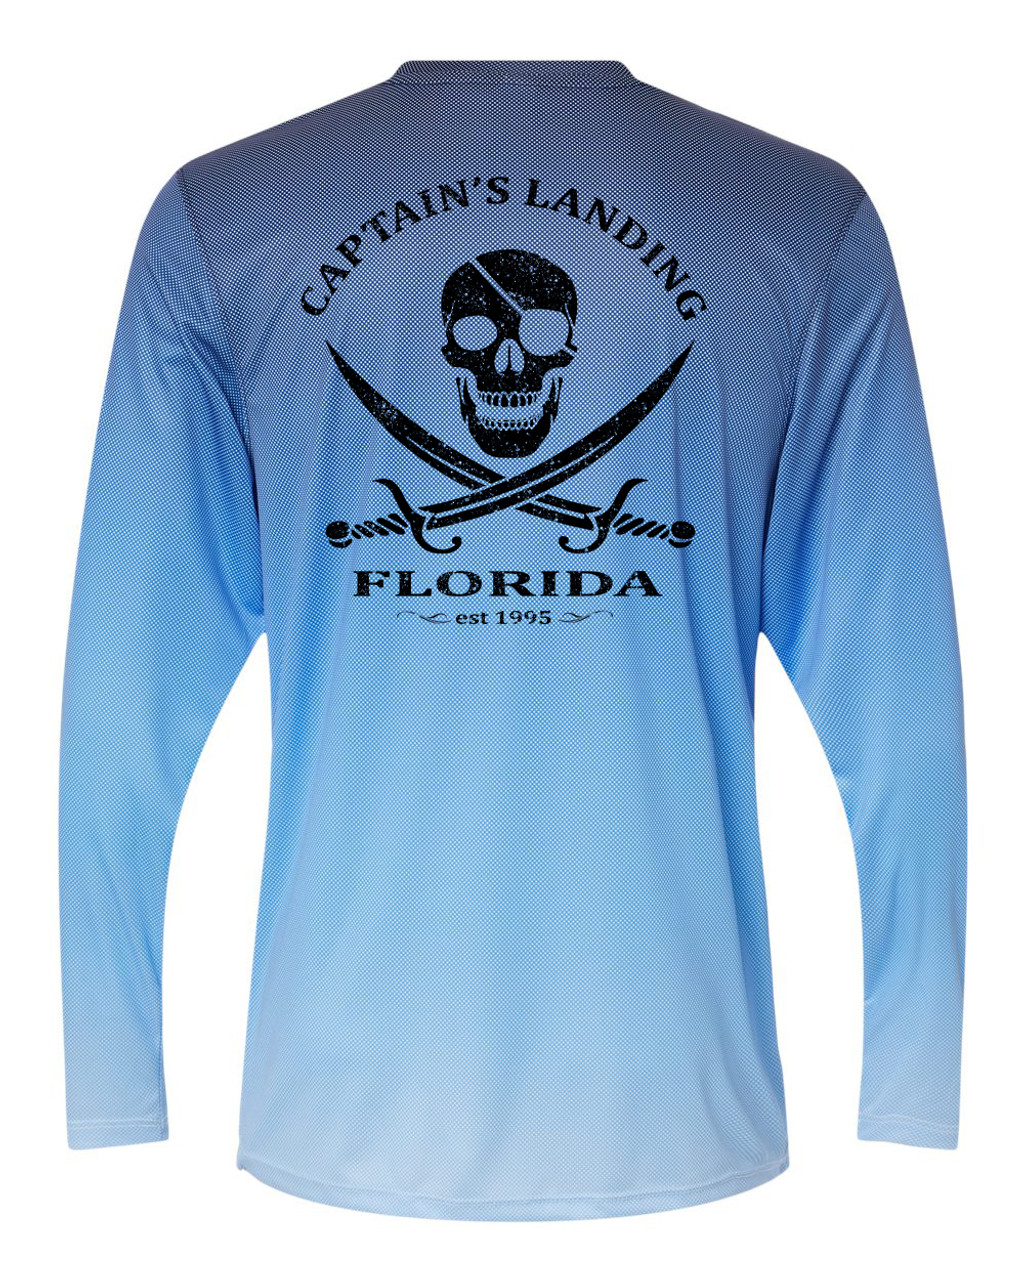 Jolly Roger Long Sleeve Sun Protection Shirt - Blue Ombre - Captains Landing